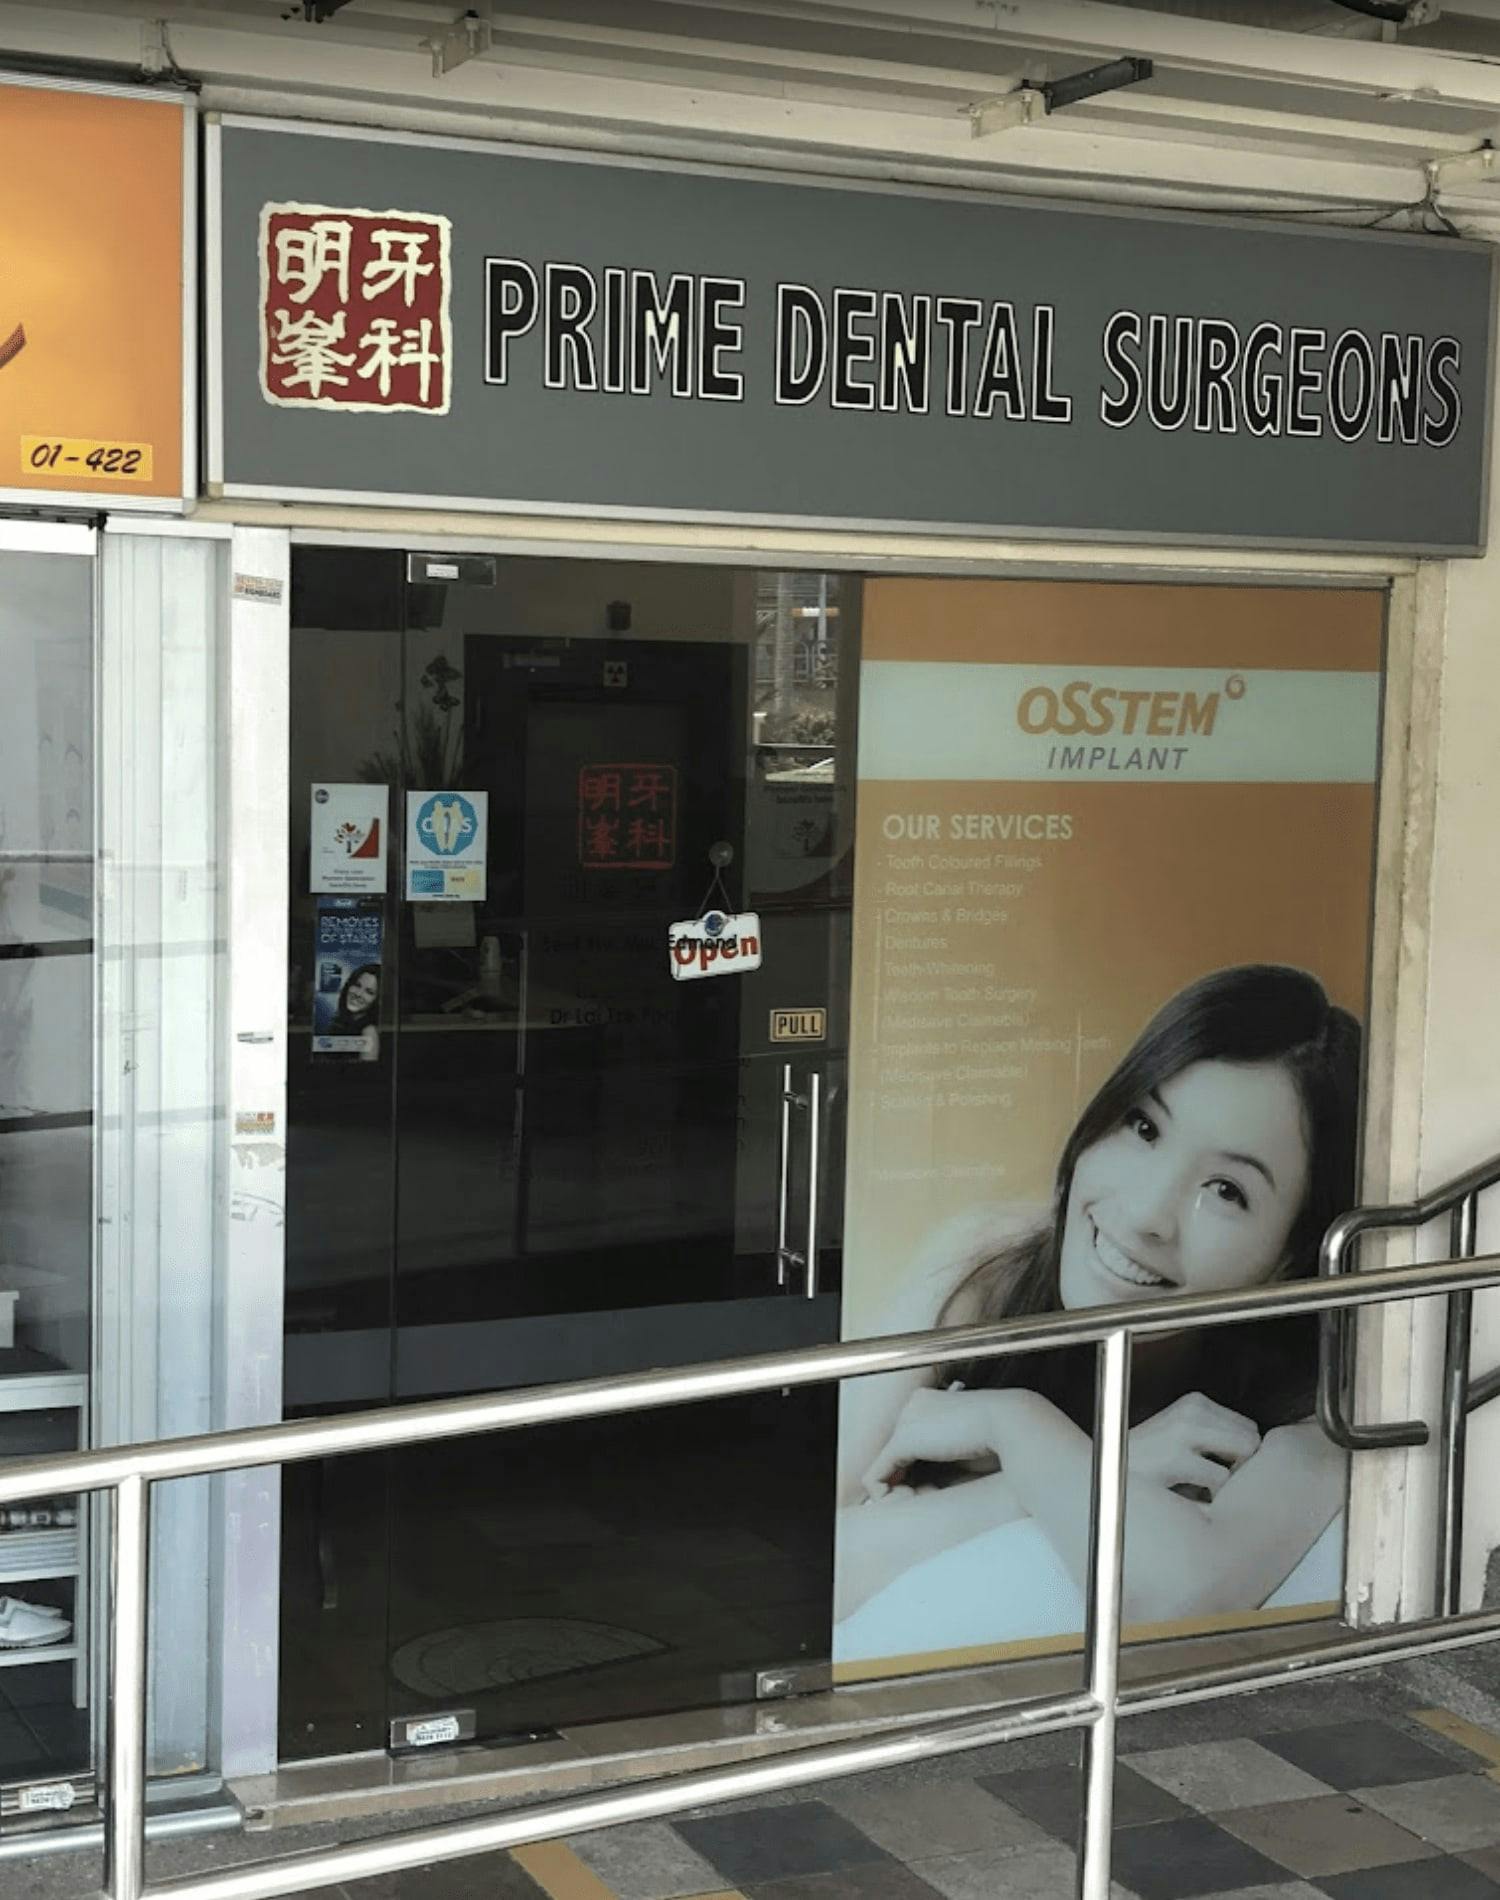 Prima Dental Surgery